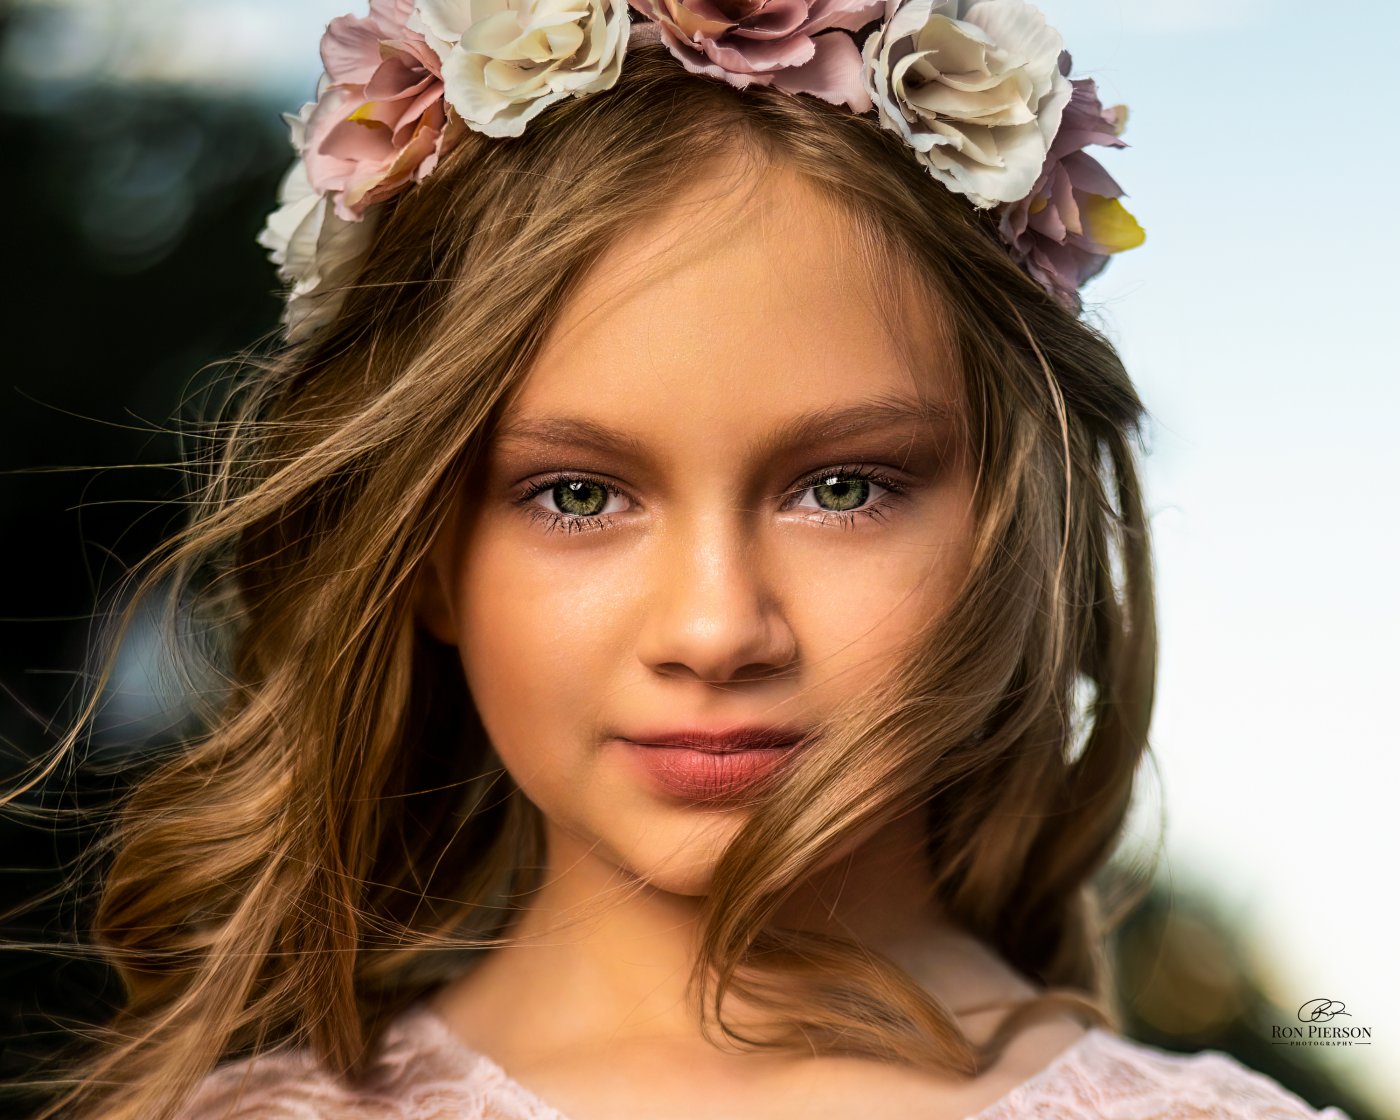 ron-pierson-photography-portrait-macaleah-flower-girl-221007-Z6A_5405-5-c.jpg